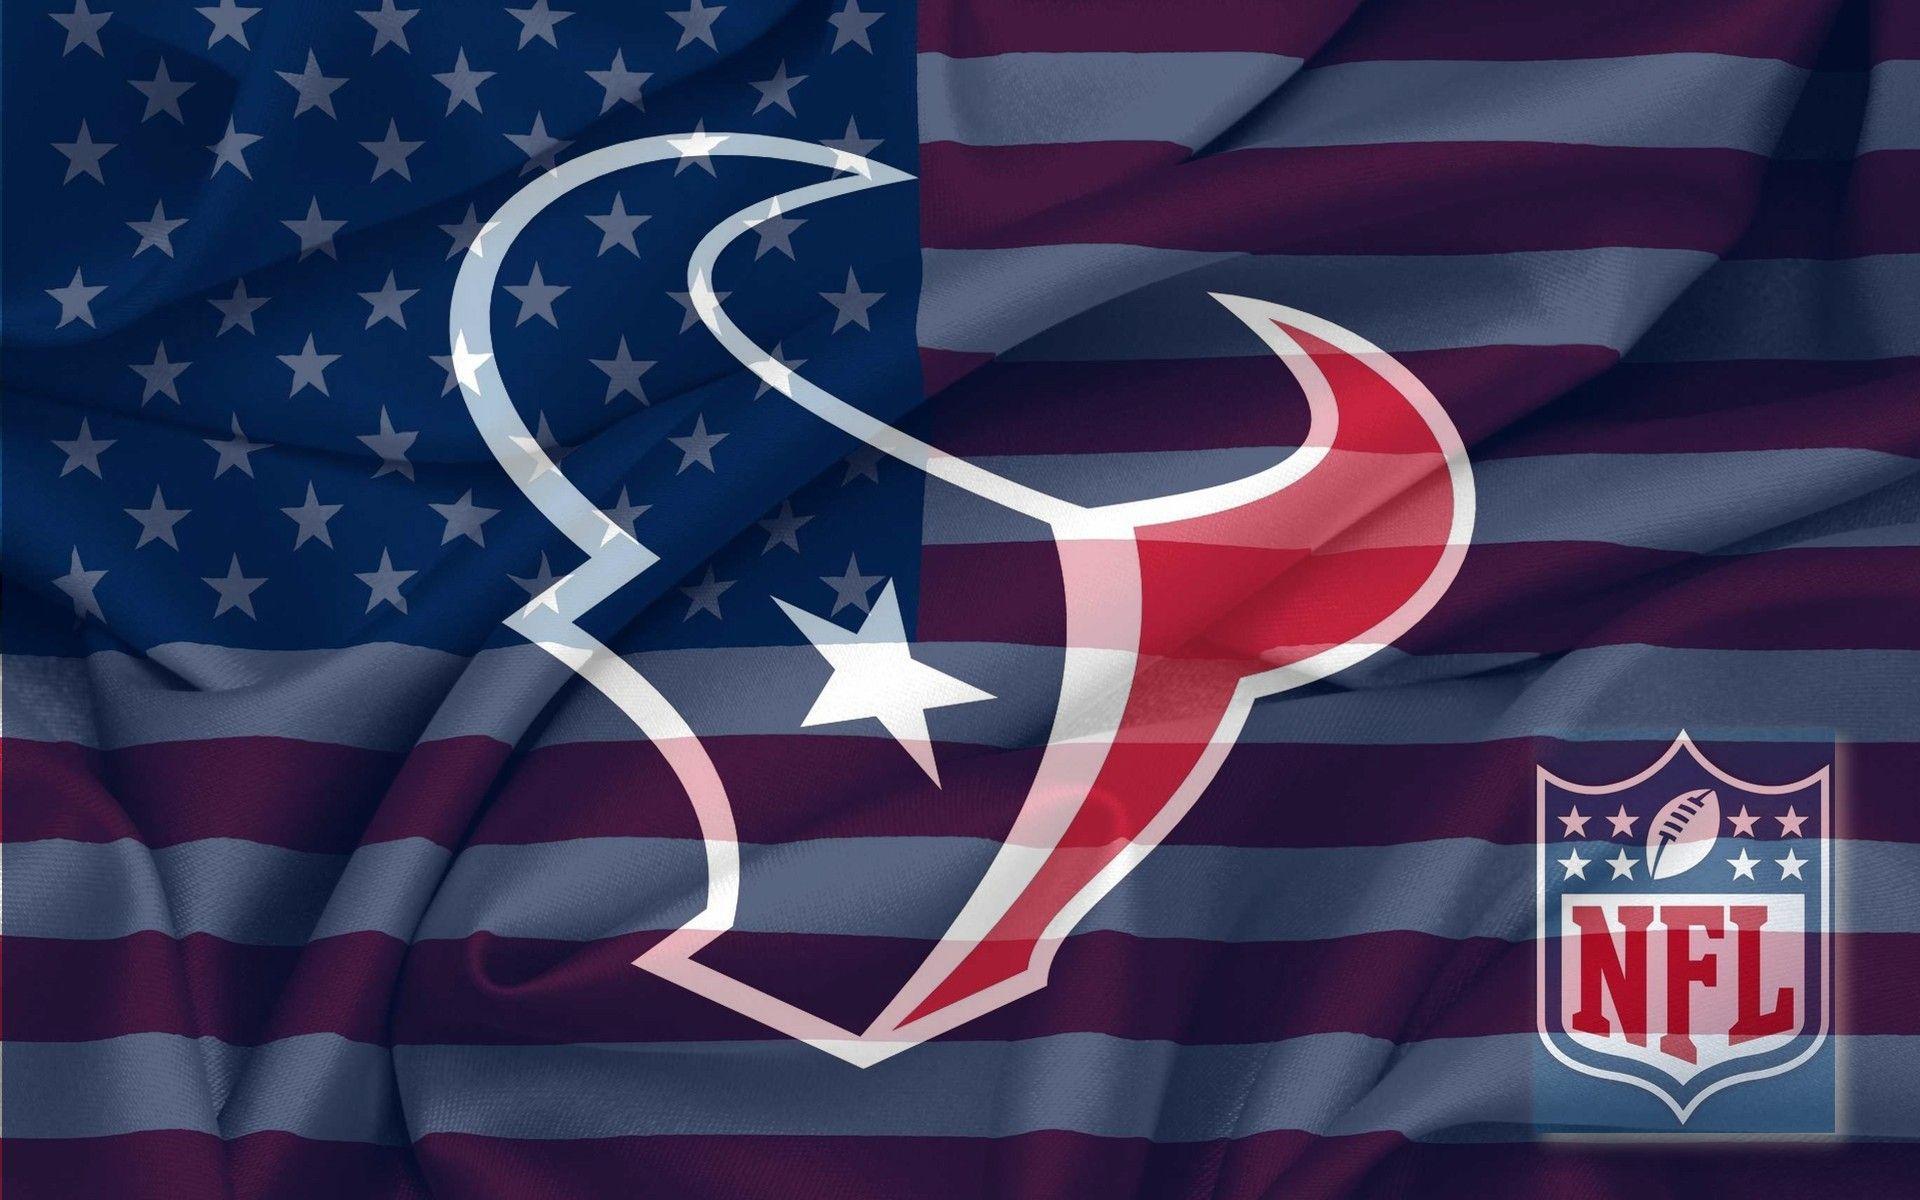 NFL Texans Logo - NFL Houston Texans Logo With NFL Logo On USA American Flag ...